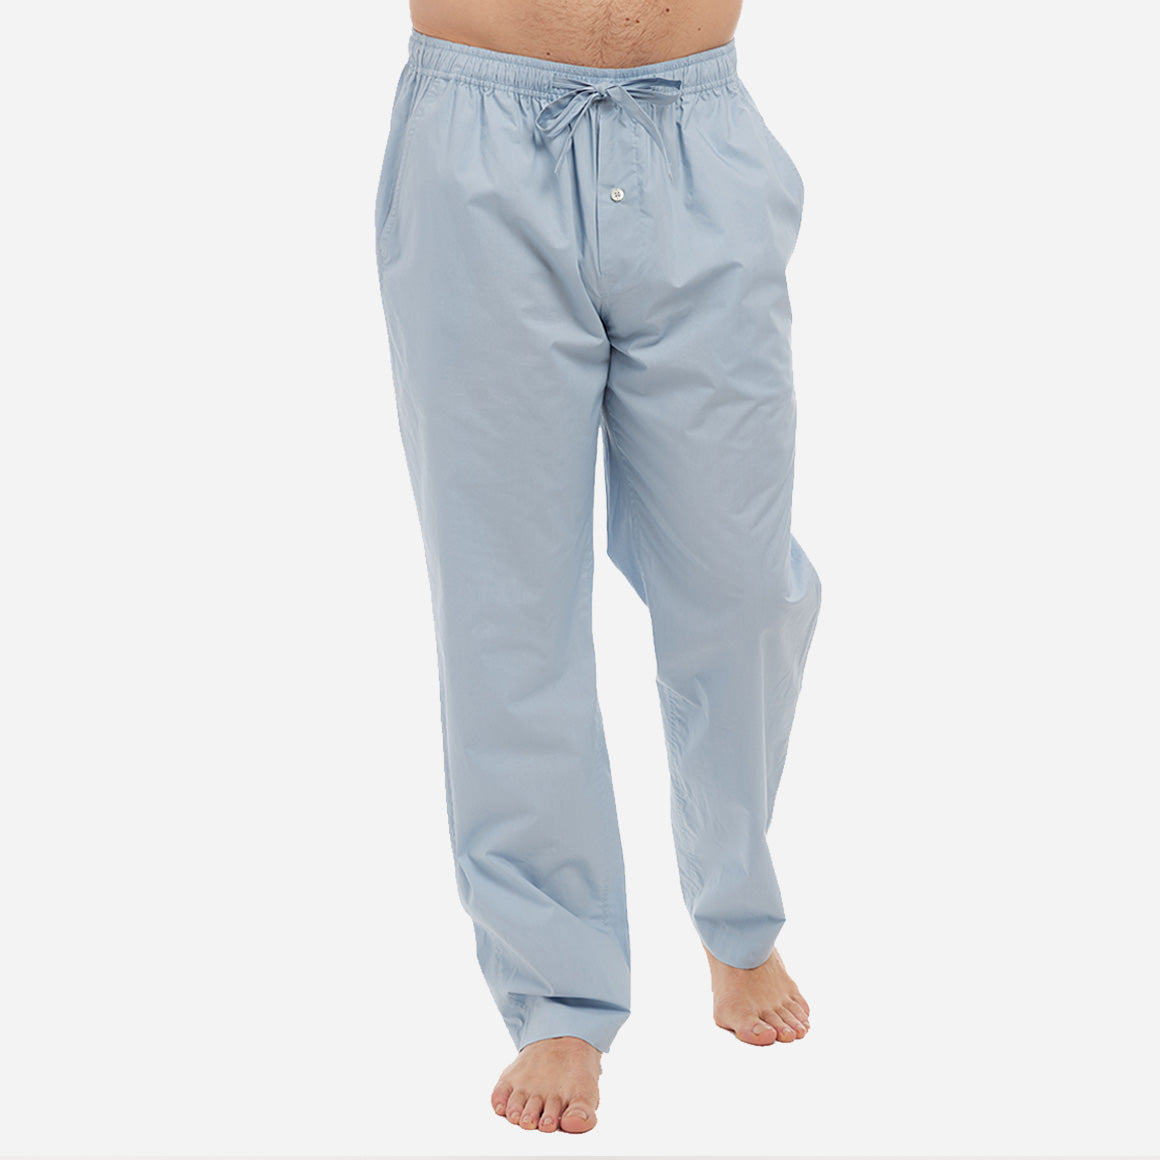 Men's 2 Jersey, Elastic Waistband w. Pockets, Button Fly, Pajama